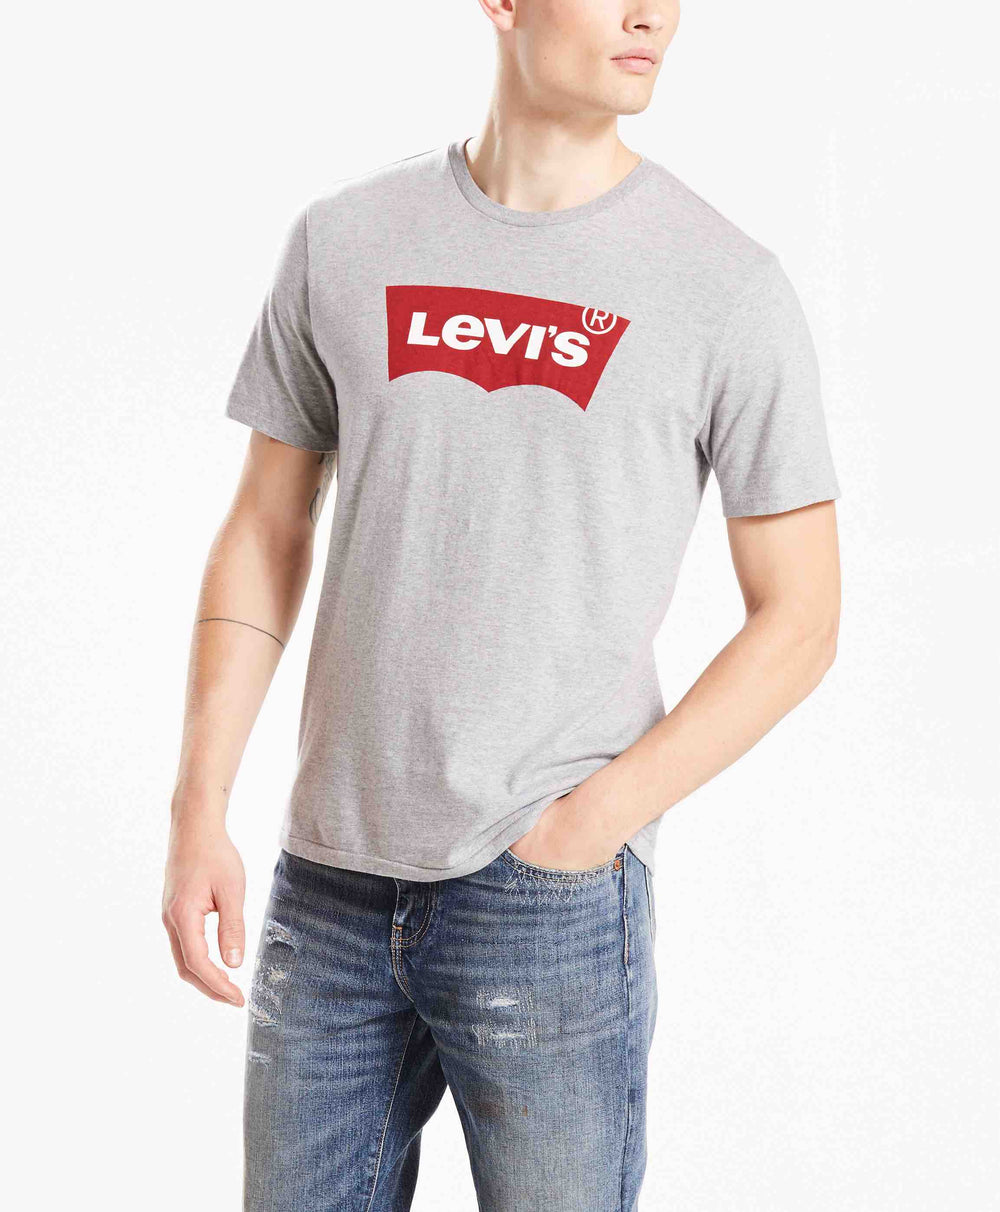 levi's classic logo t shirt